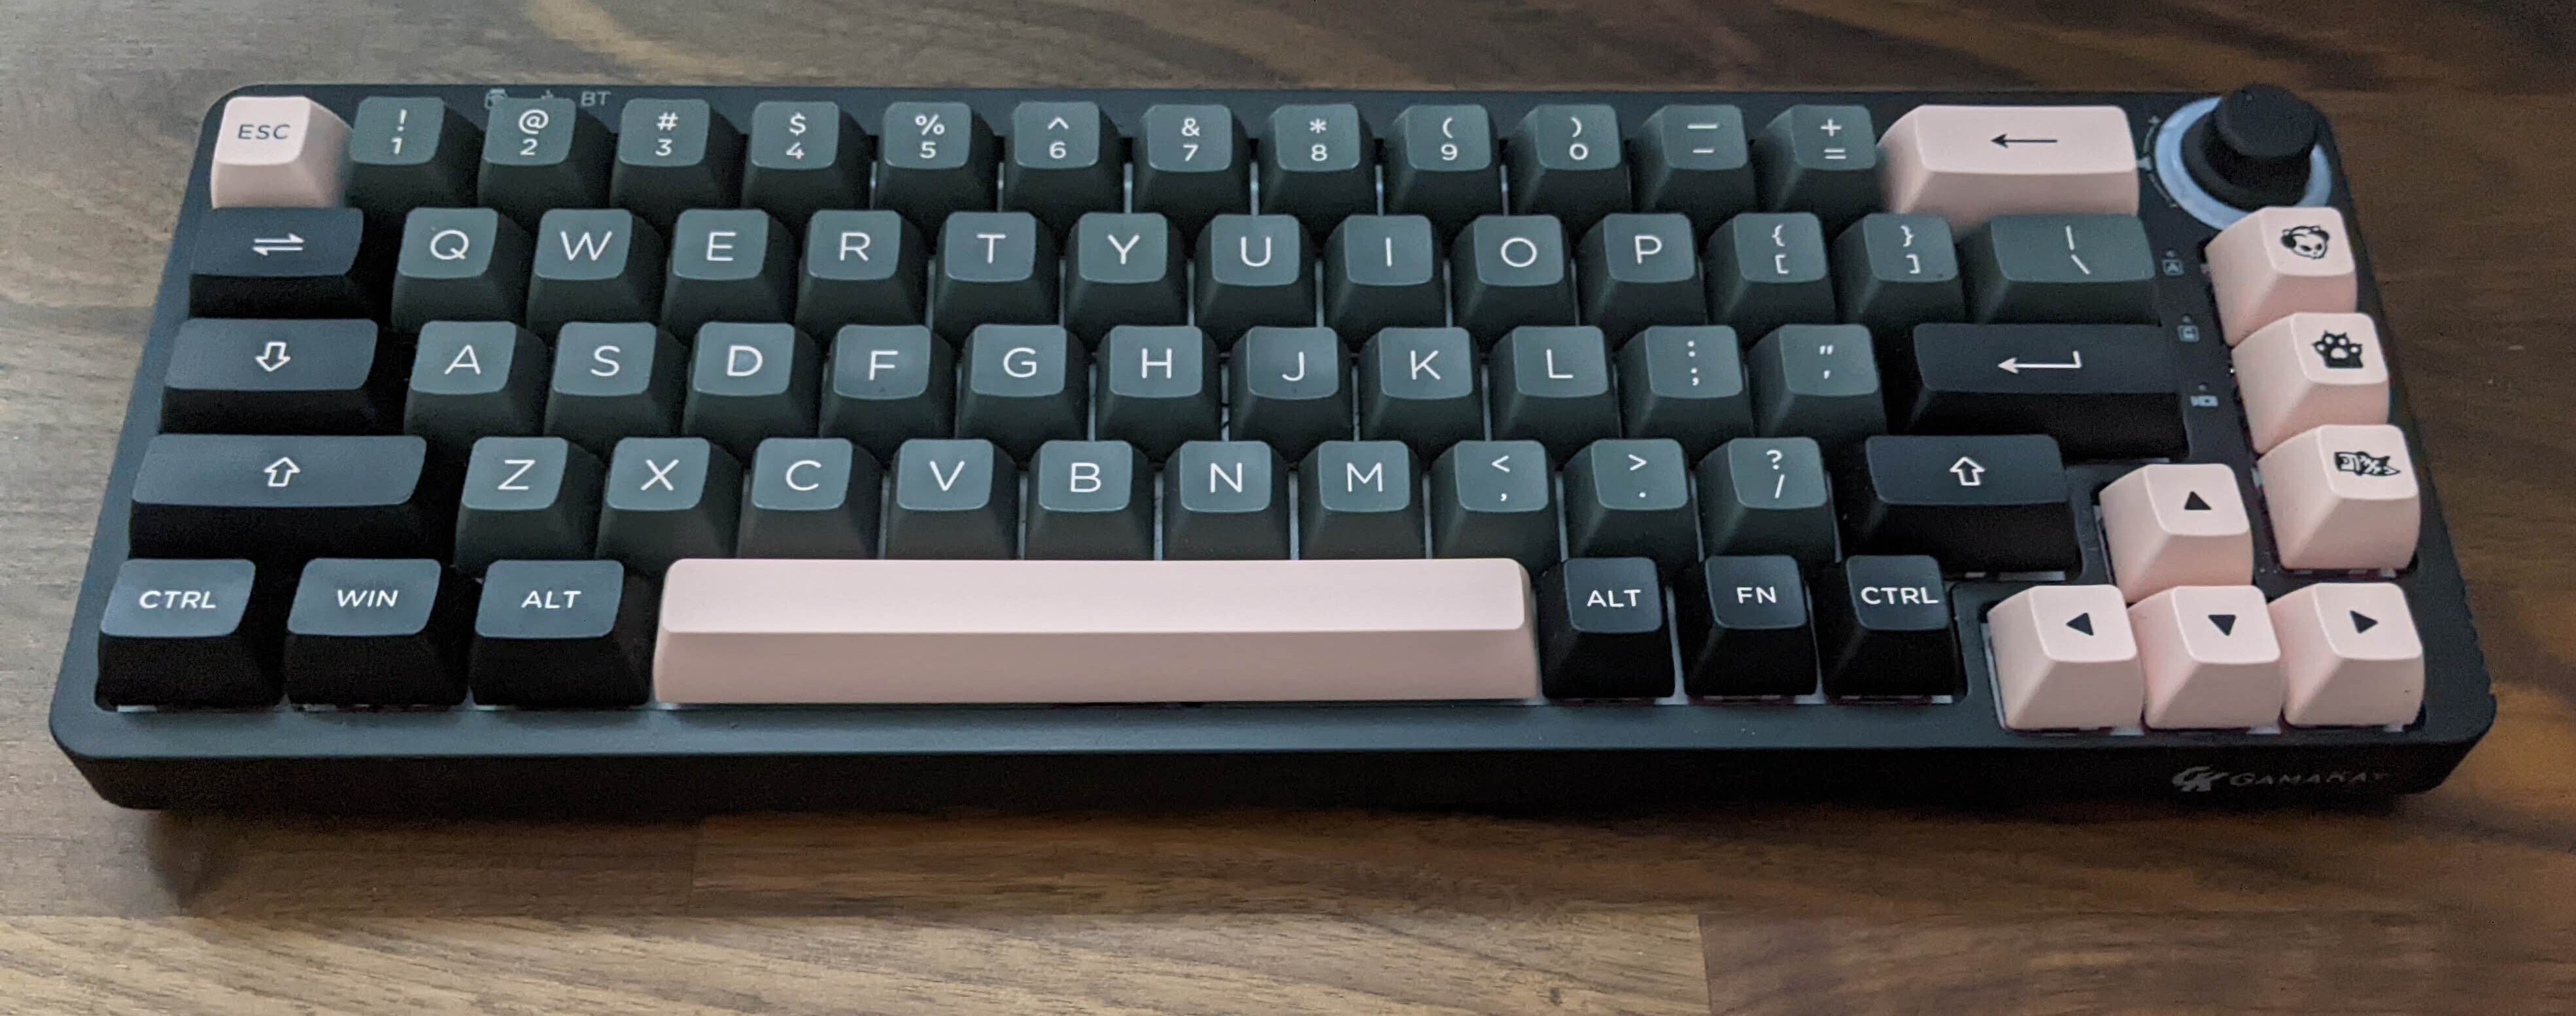 assembled keyboard